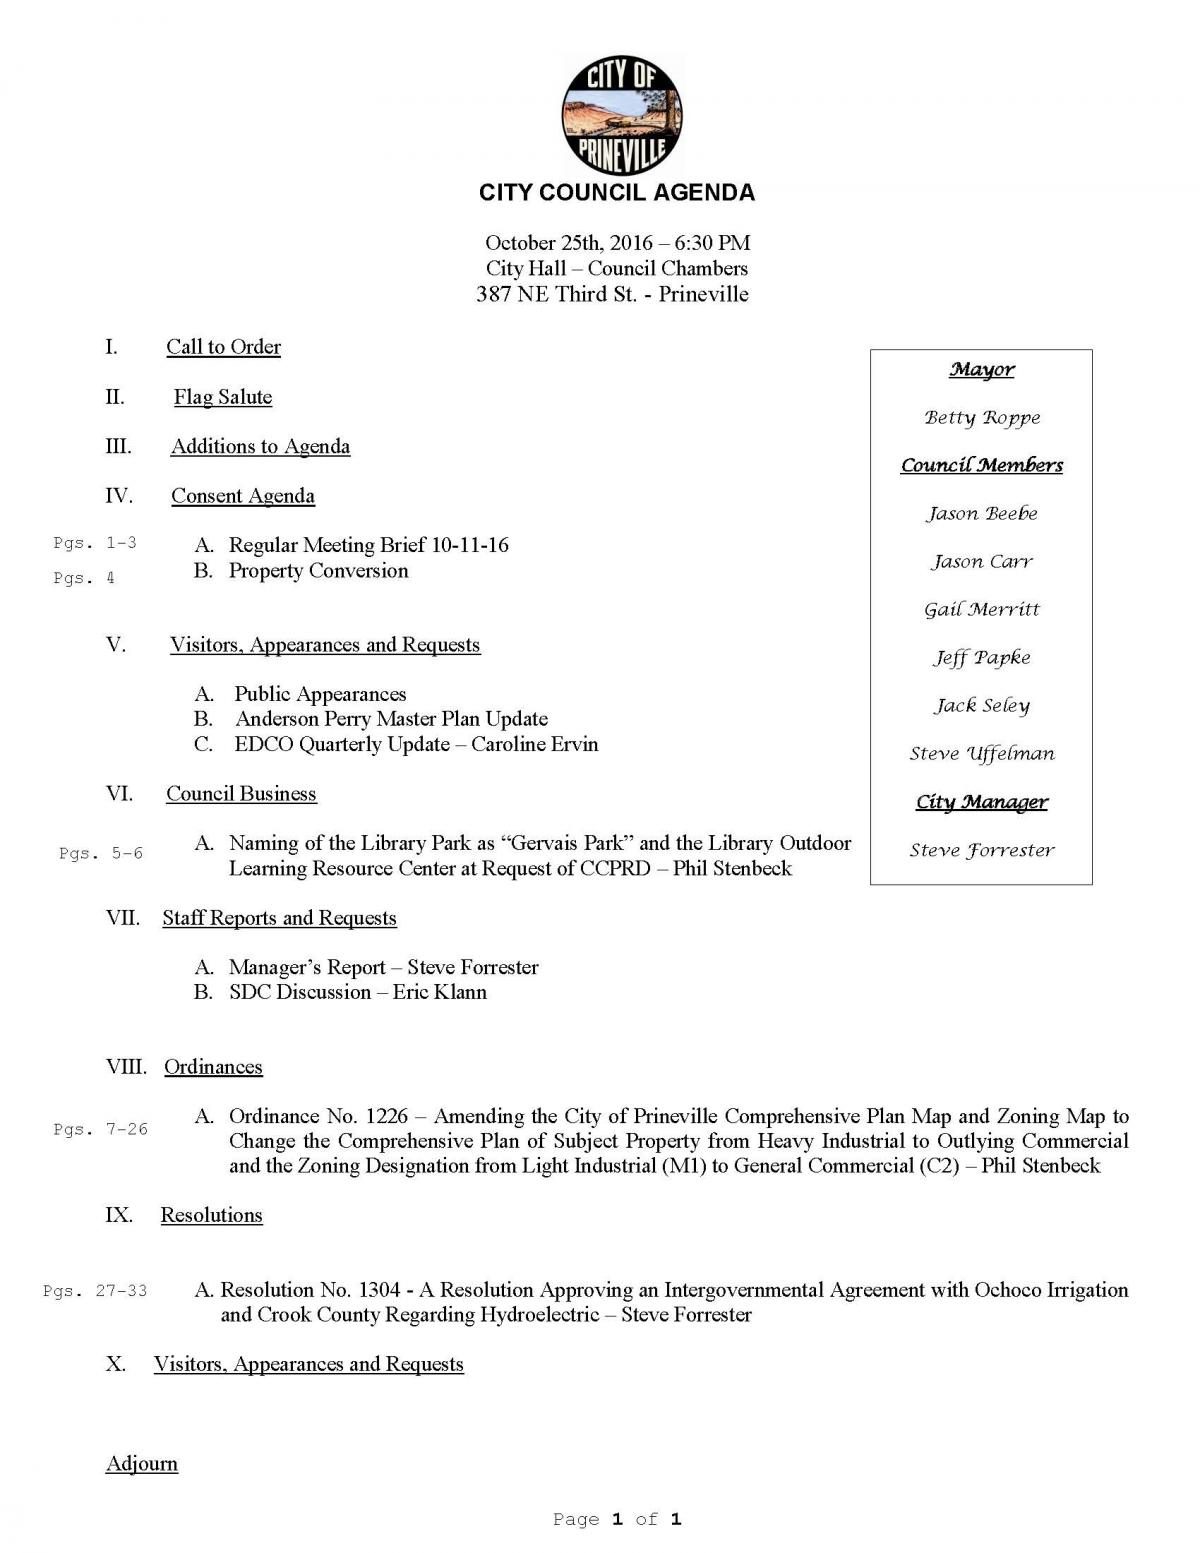 Council Agenda 10-25-16